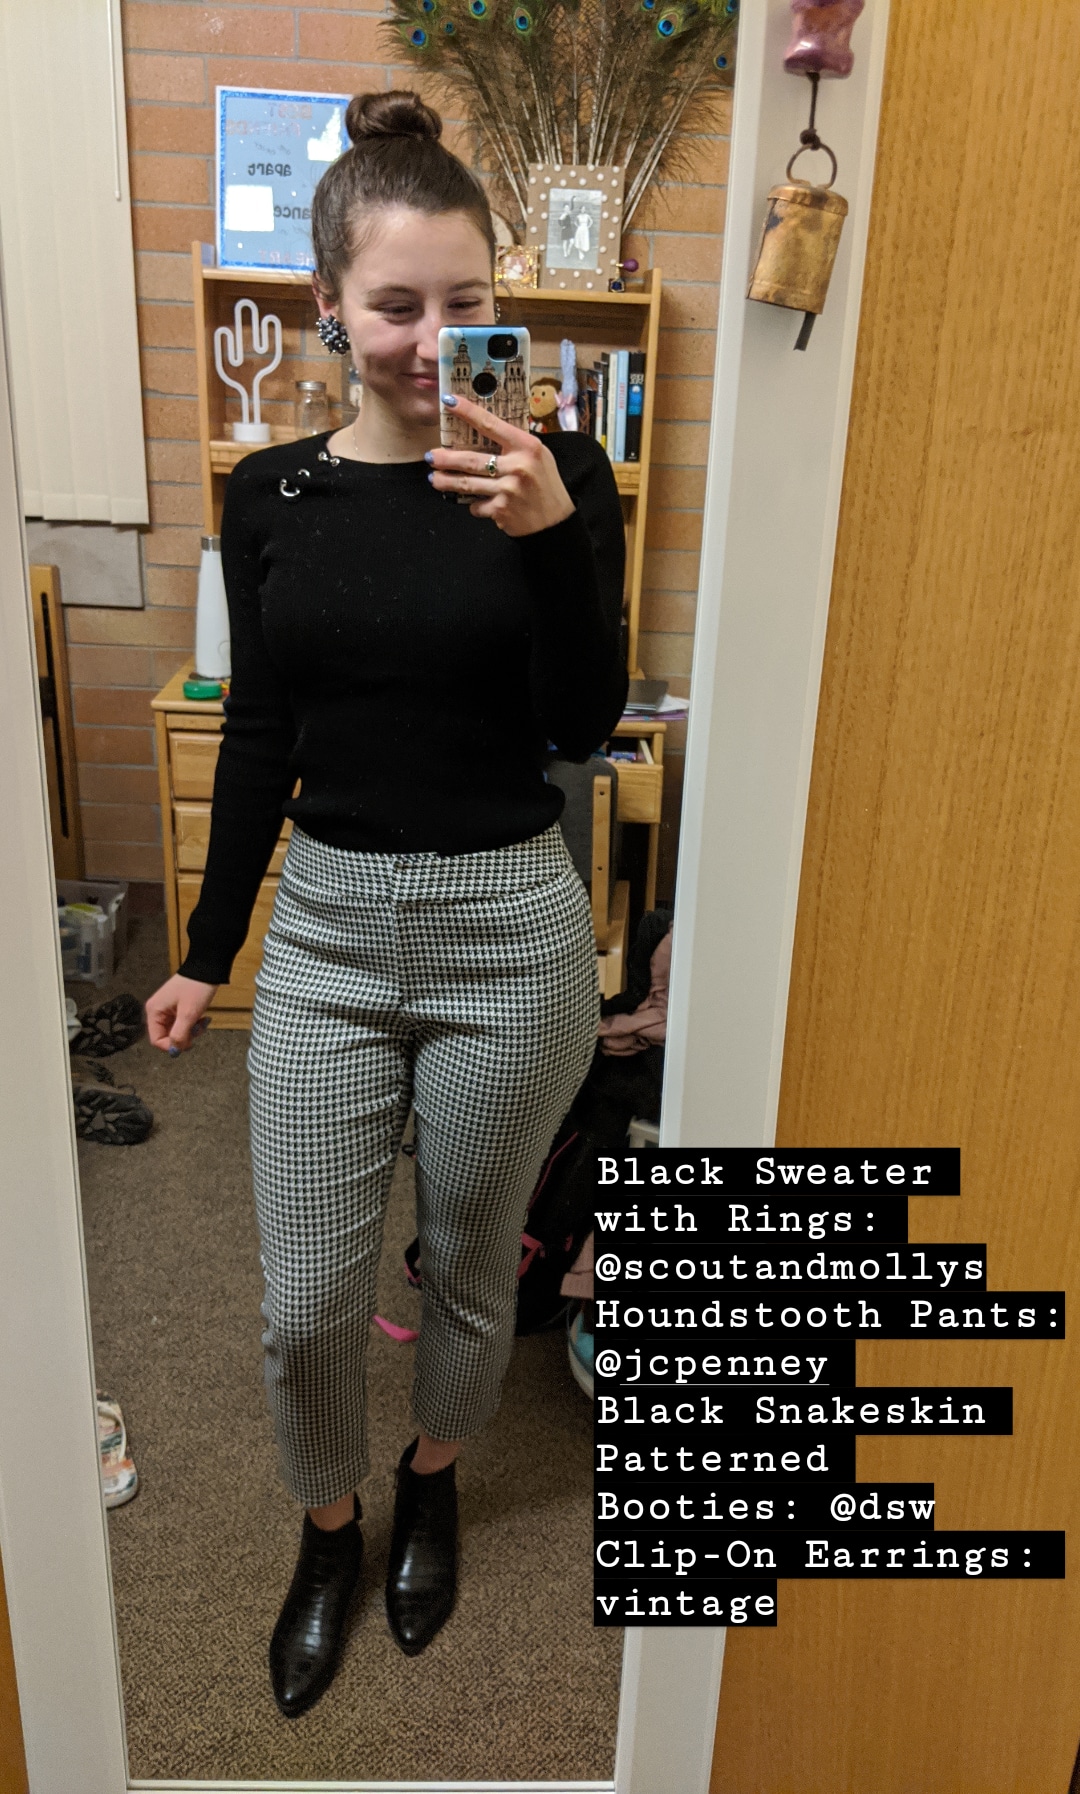 black sweater, houndstooth pants, black booties